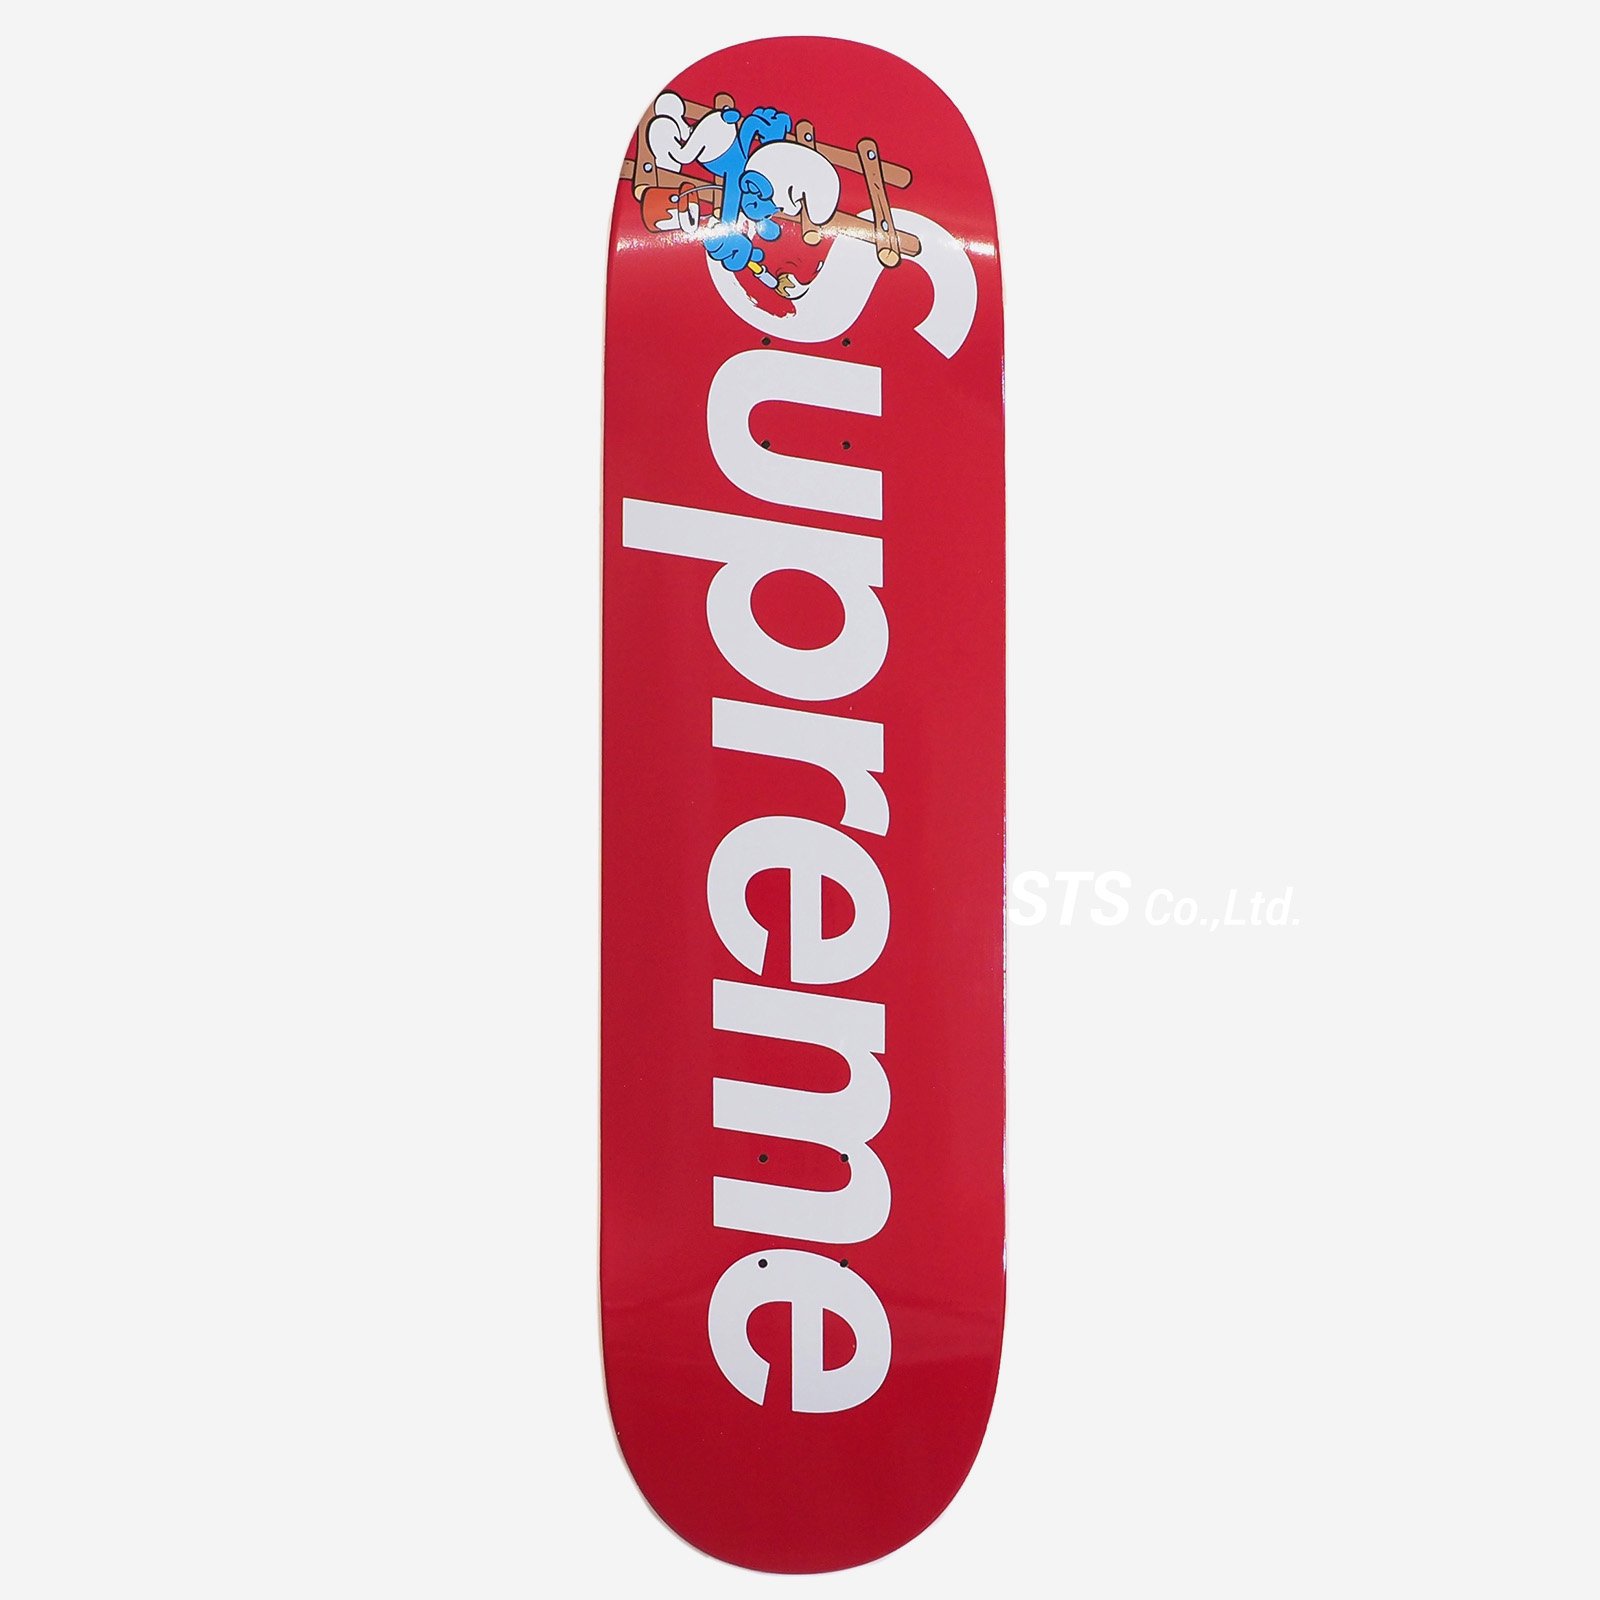 Supreme / Smurfs Skateboard Deck スマーフ